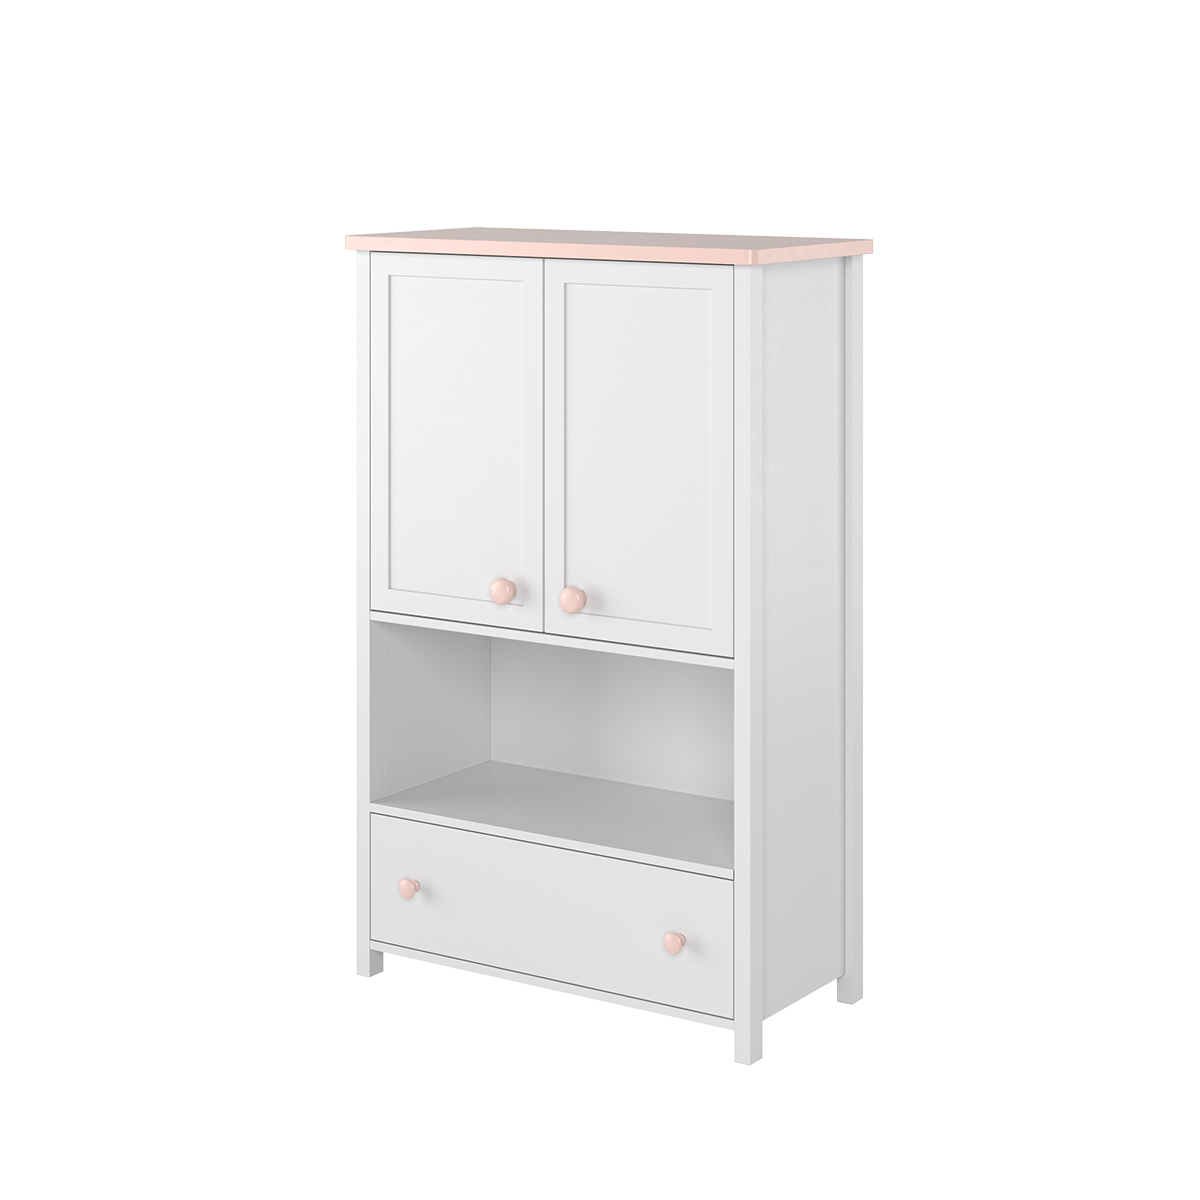 petits-meubles-alissa-LN11BR-armoire-basse-2-portes-1-tiroir-blanc-rose-01